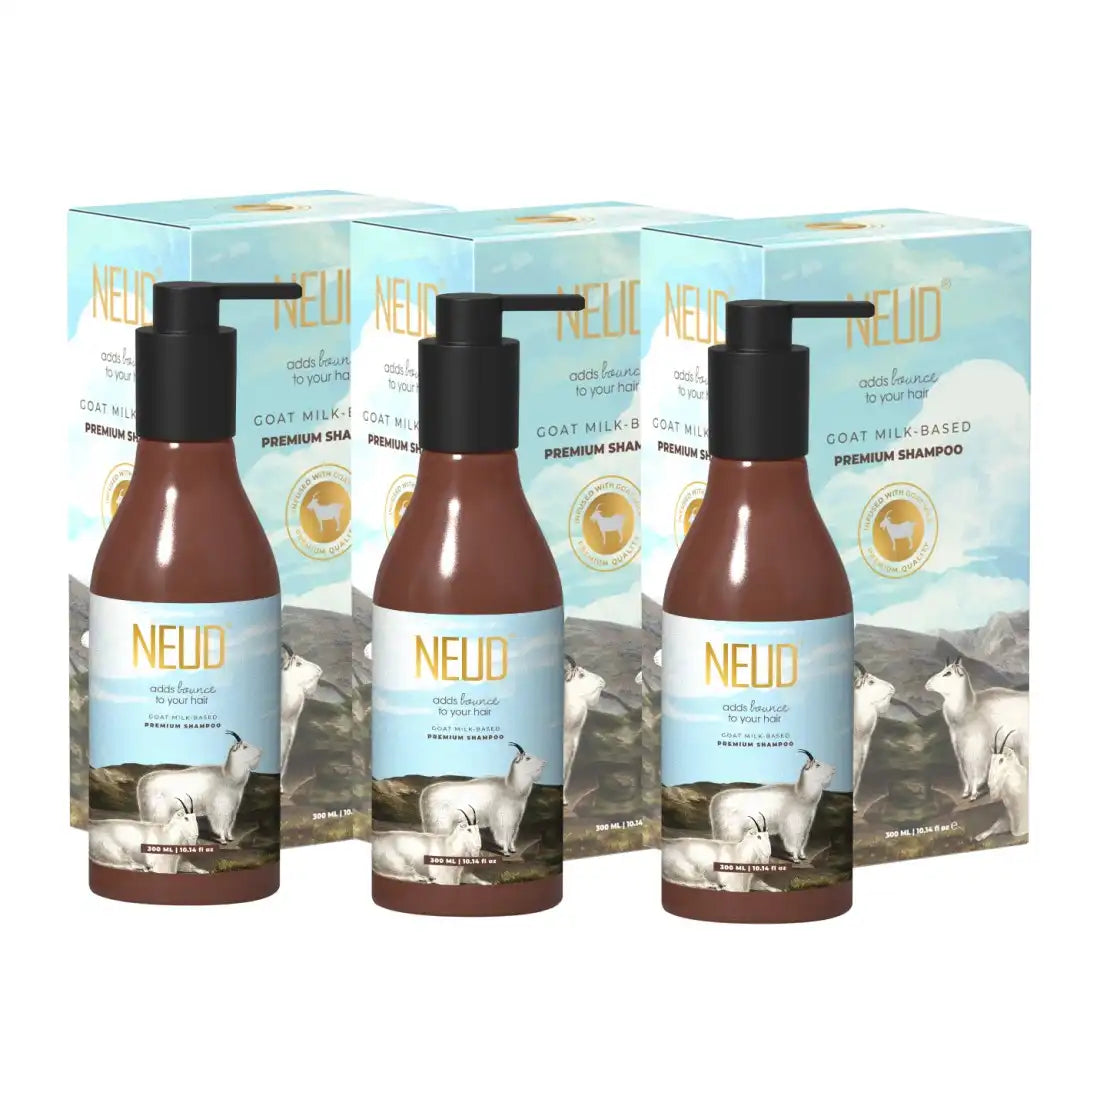 NEUD Goat Milk Shampoo for Men & Women - 300 ml with Free Zipper Pouch